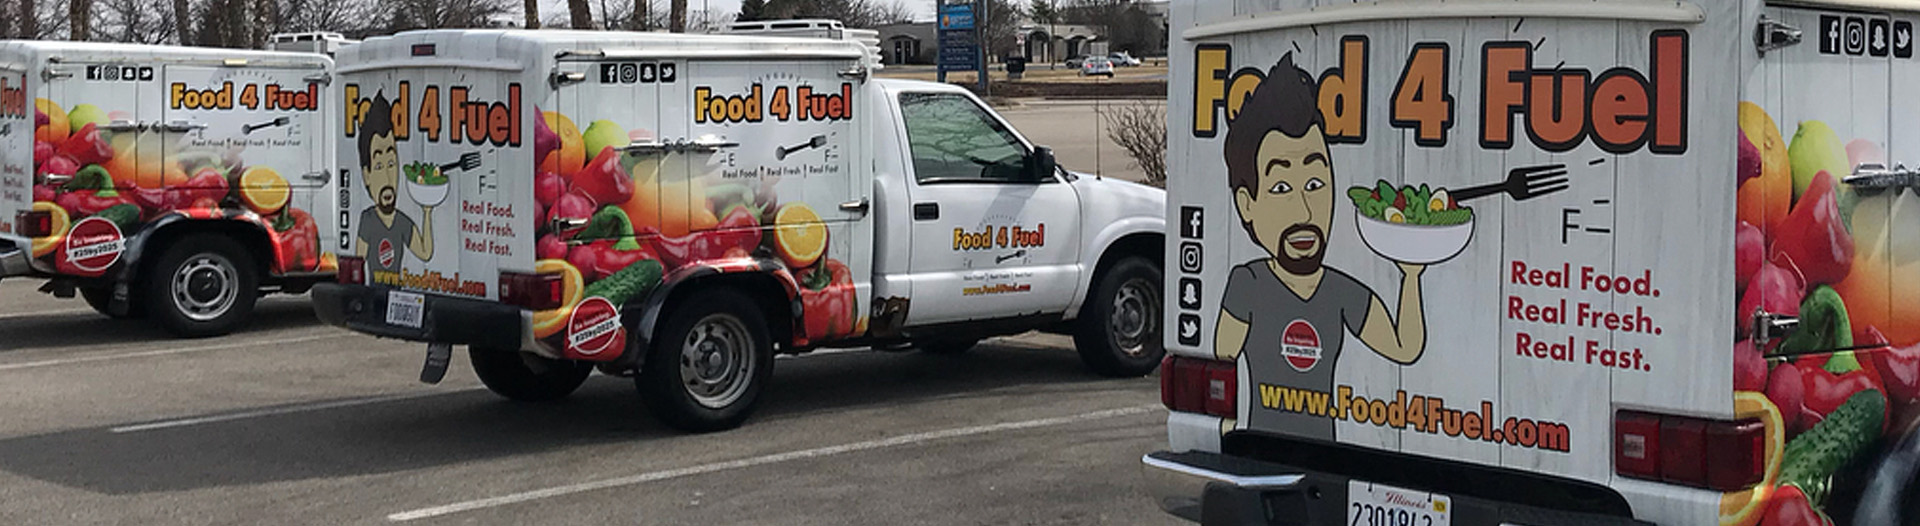 food 4 fuel trucks - healthy meal prep delivery